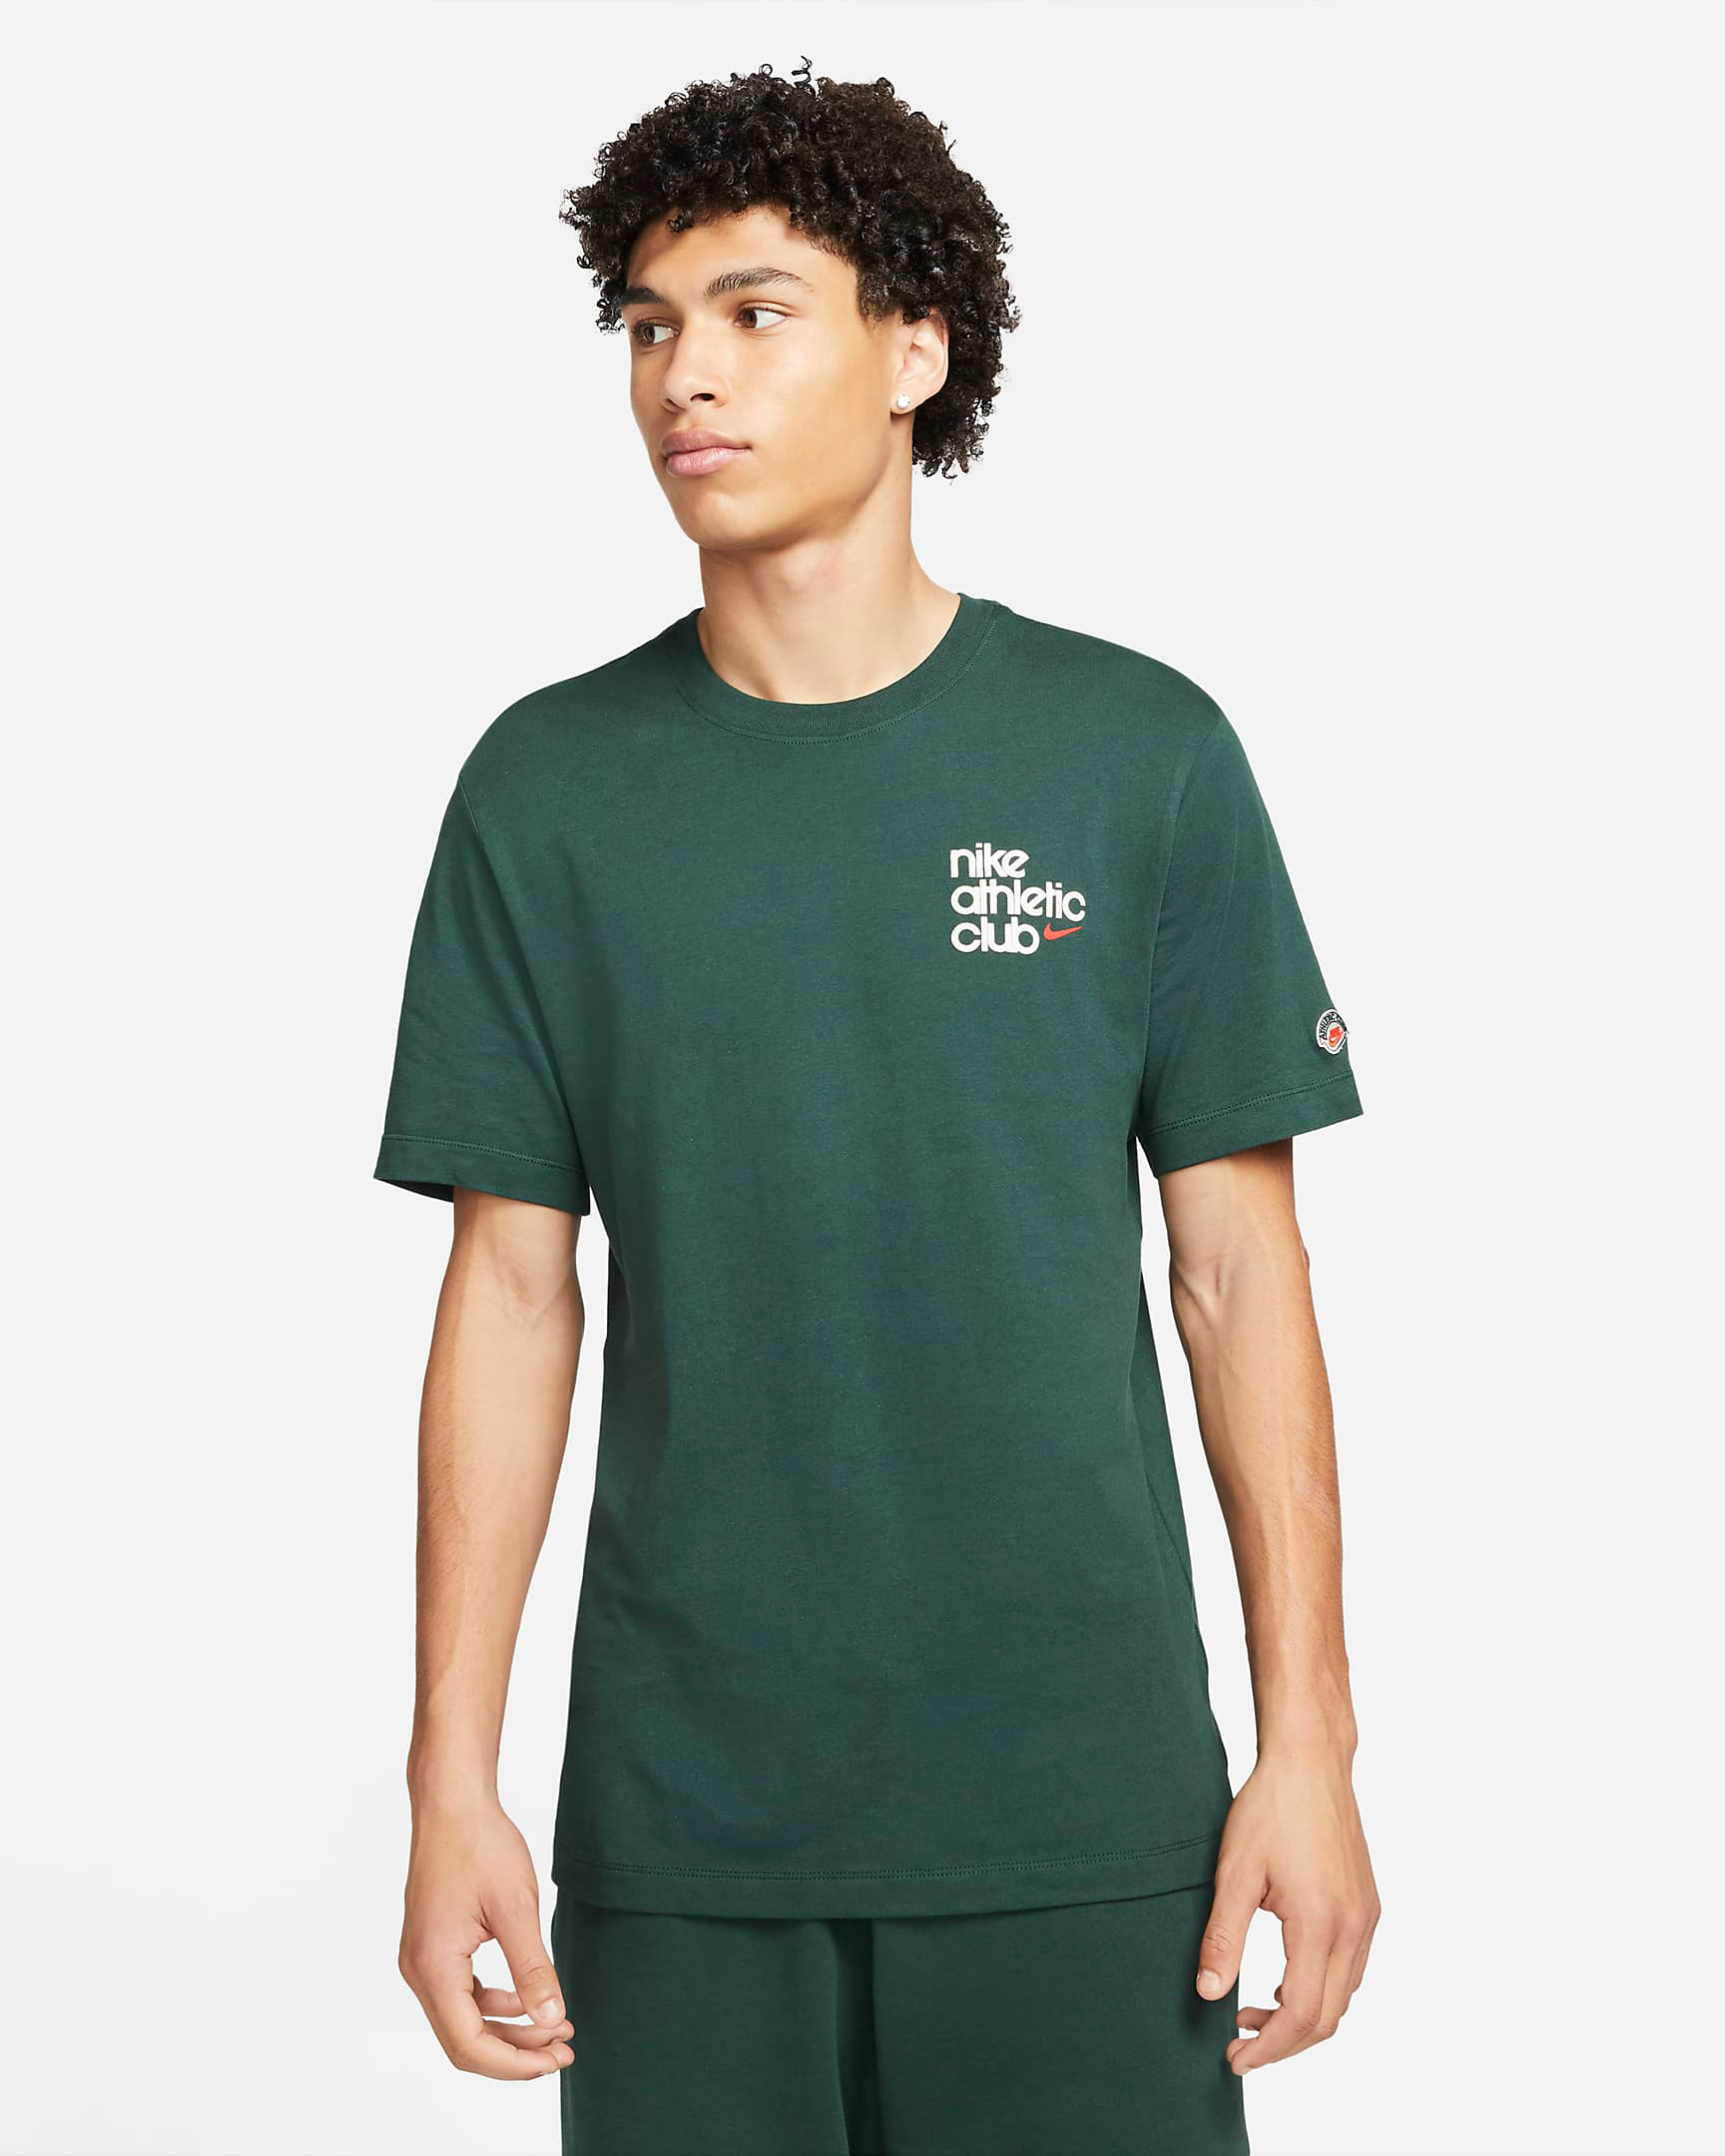 nike-athletic-club-t-shirt-pro-green-1